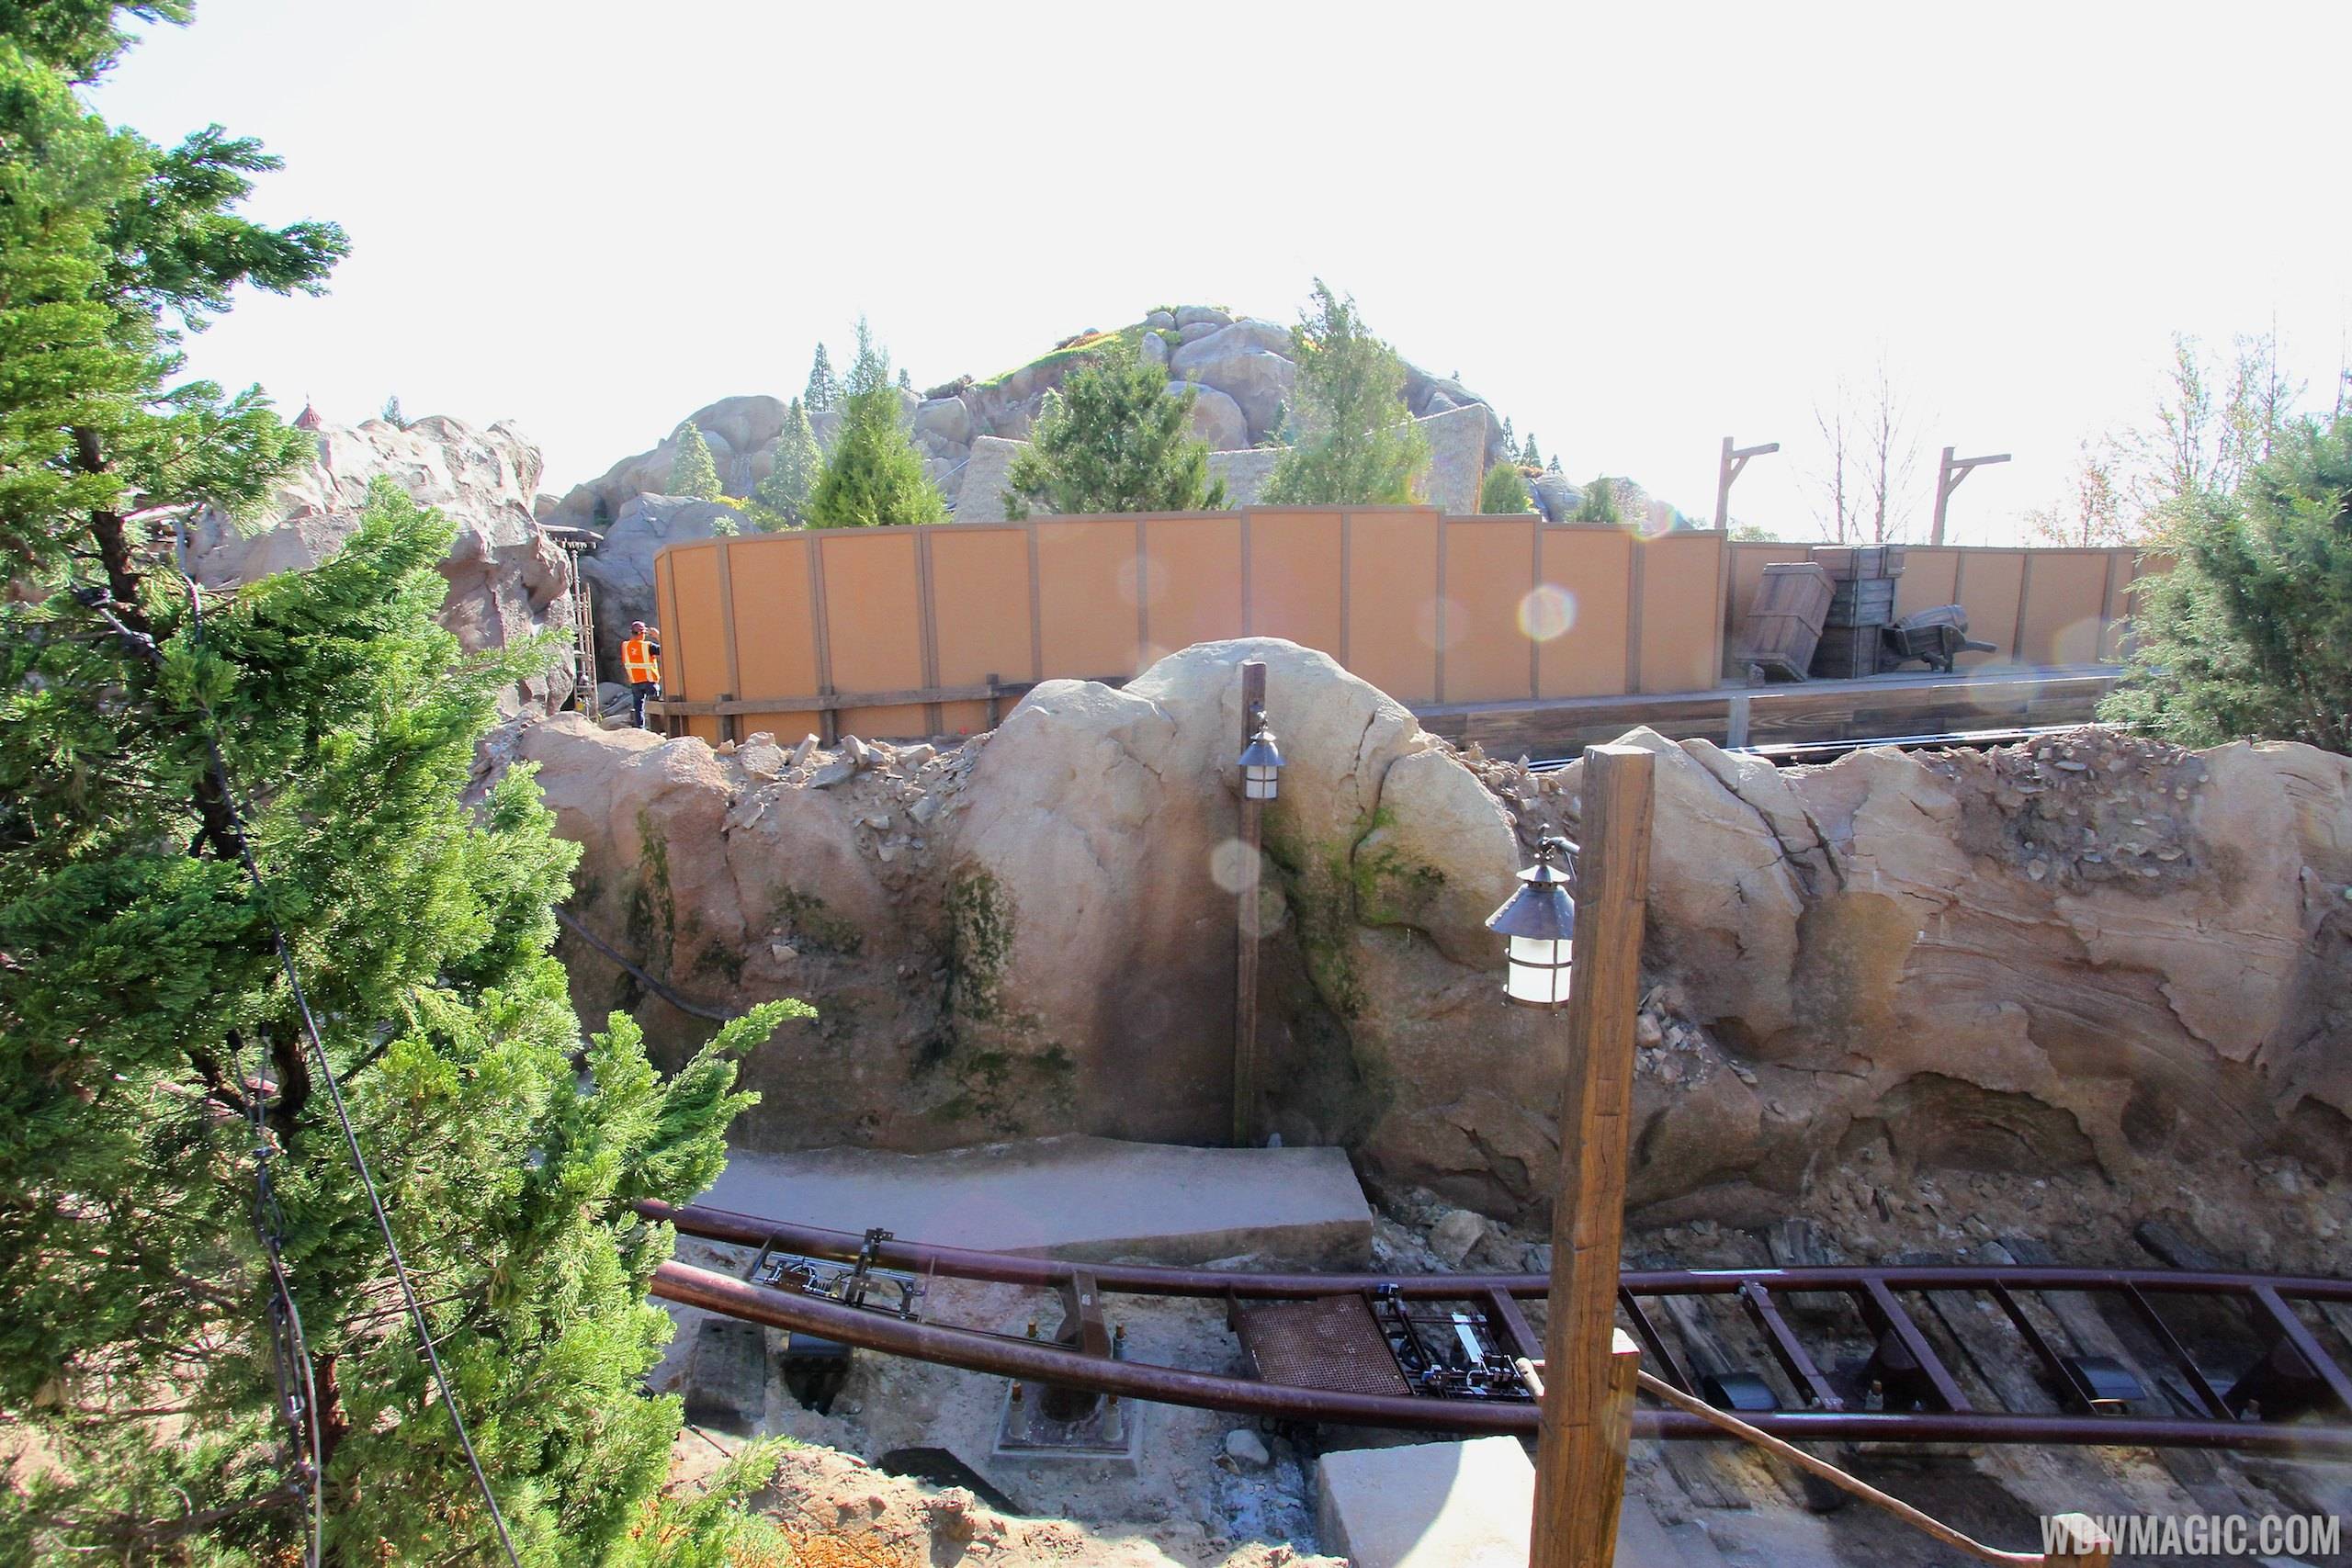 Seven Dwarfs Mine Train coaster construction